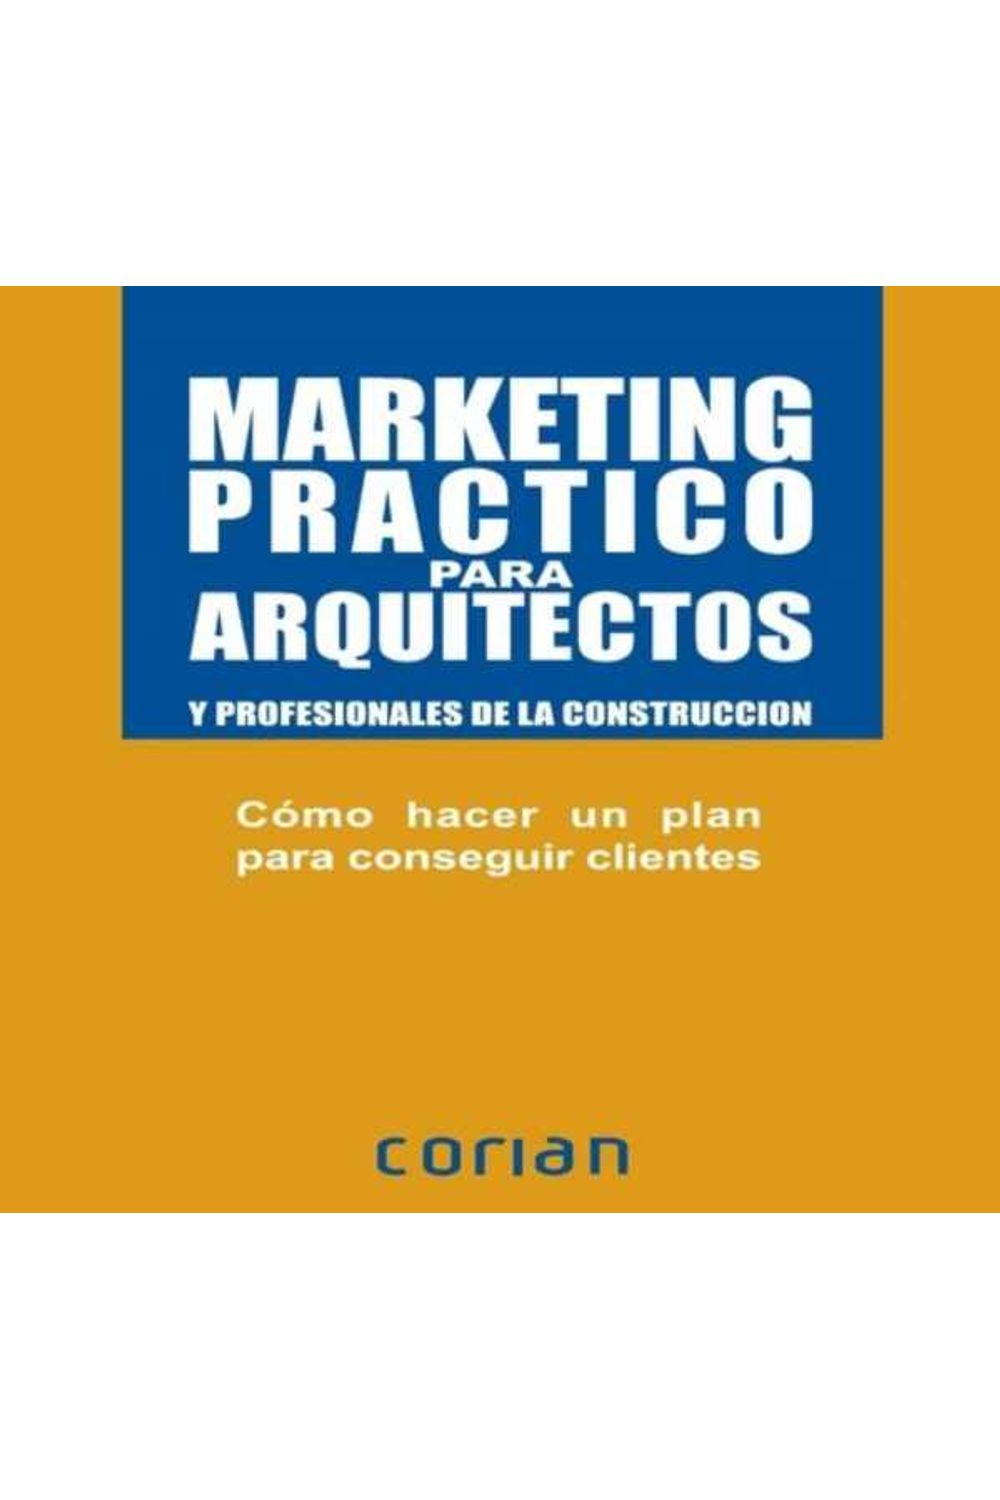 bw-marketing-praacutectico-para-arquitectos-espantildeol-cp67-9789873410314